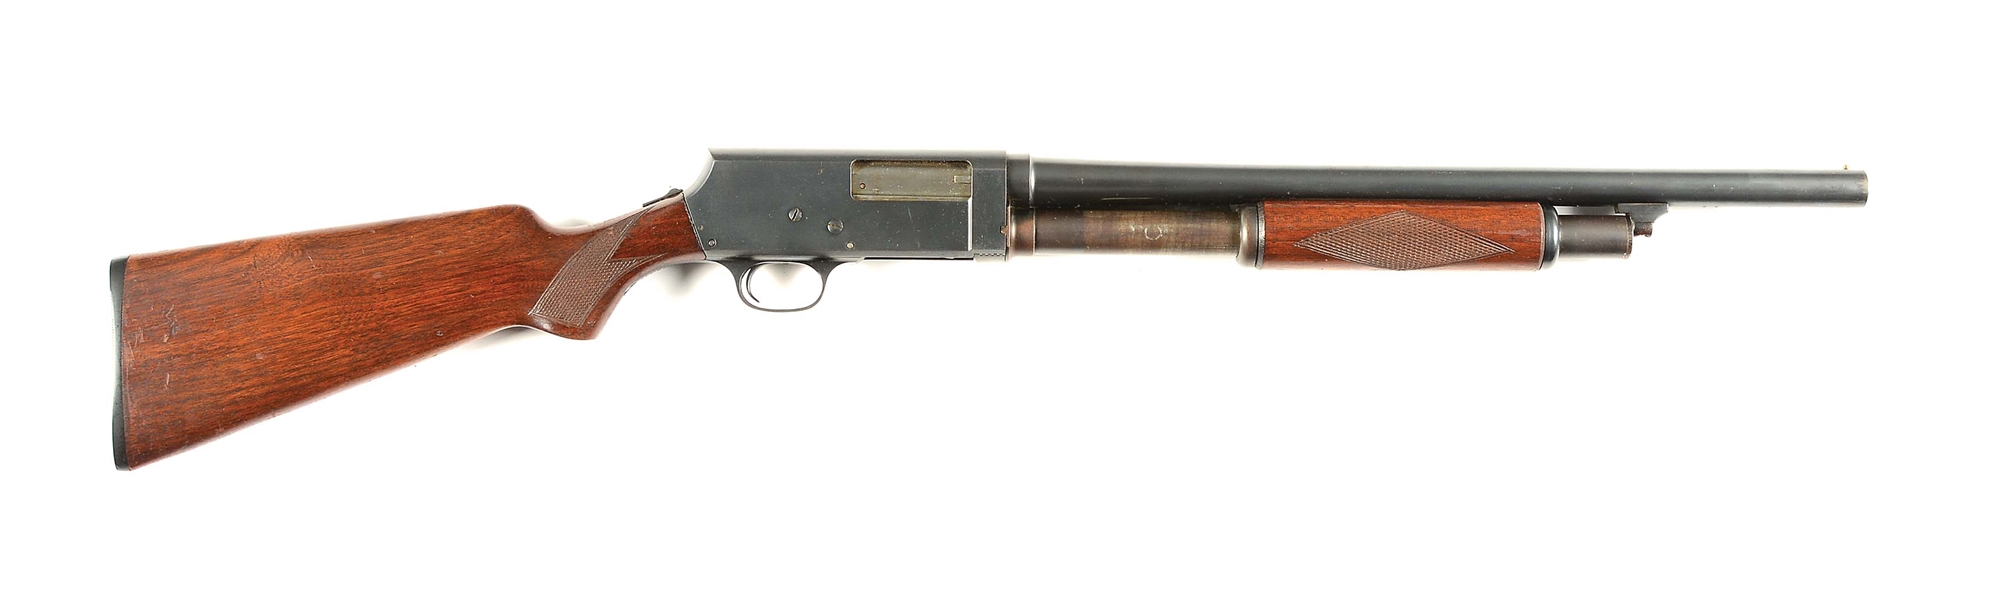 (C) MARTIALLY MARKED STEVENS 520-30 "RIOT GUN".